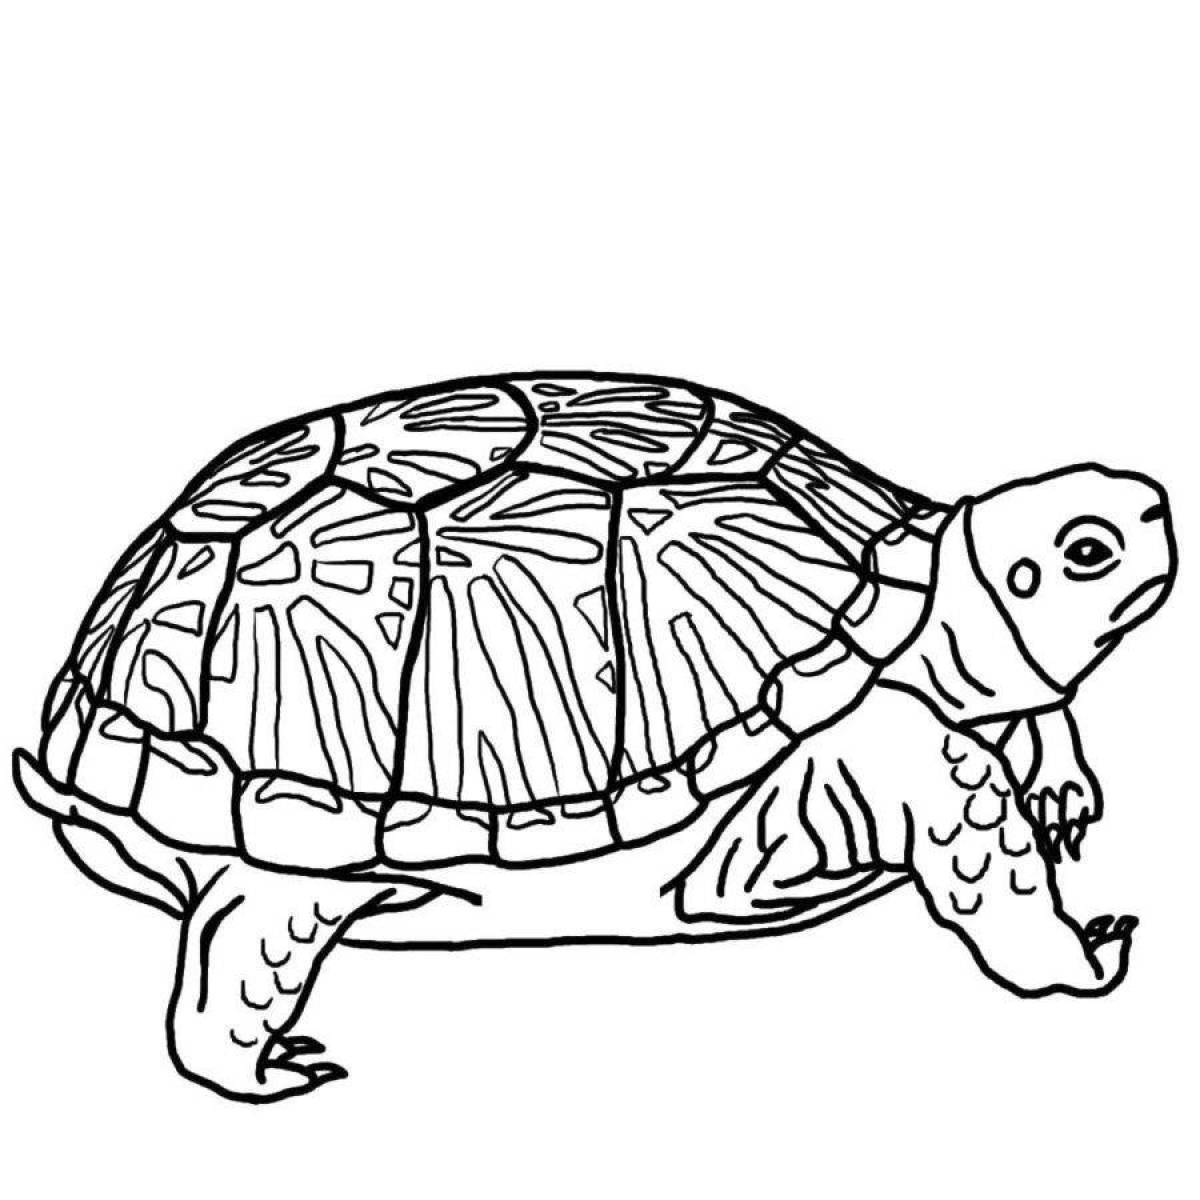 Attractive turtle coloring book